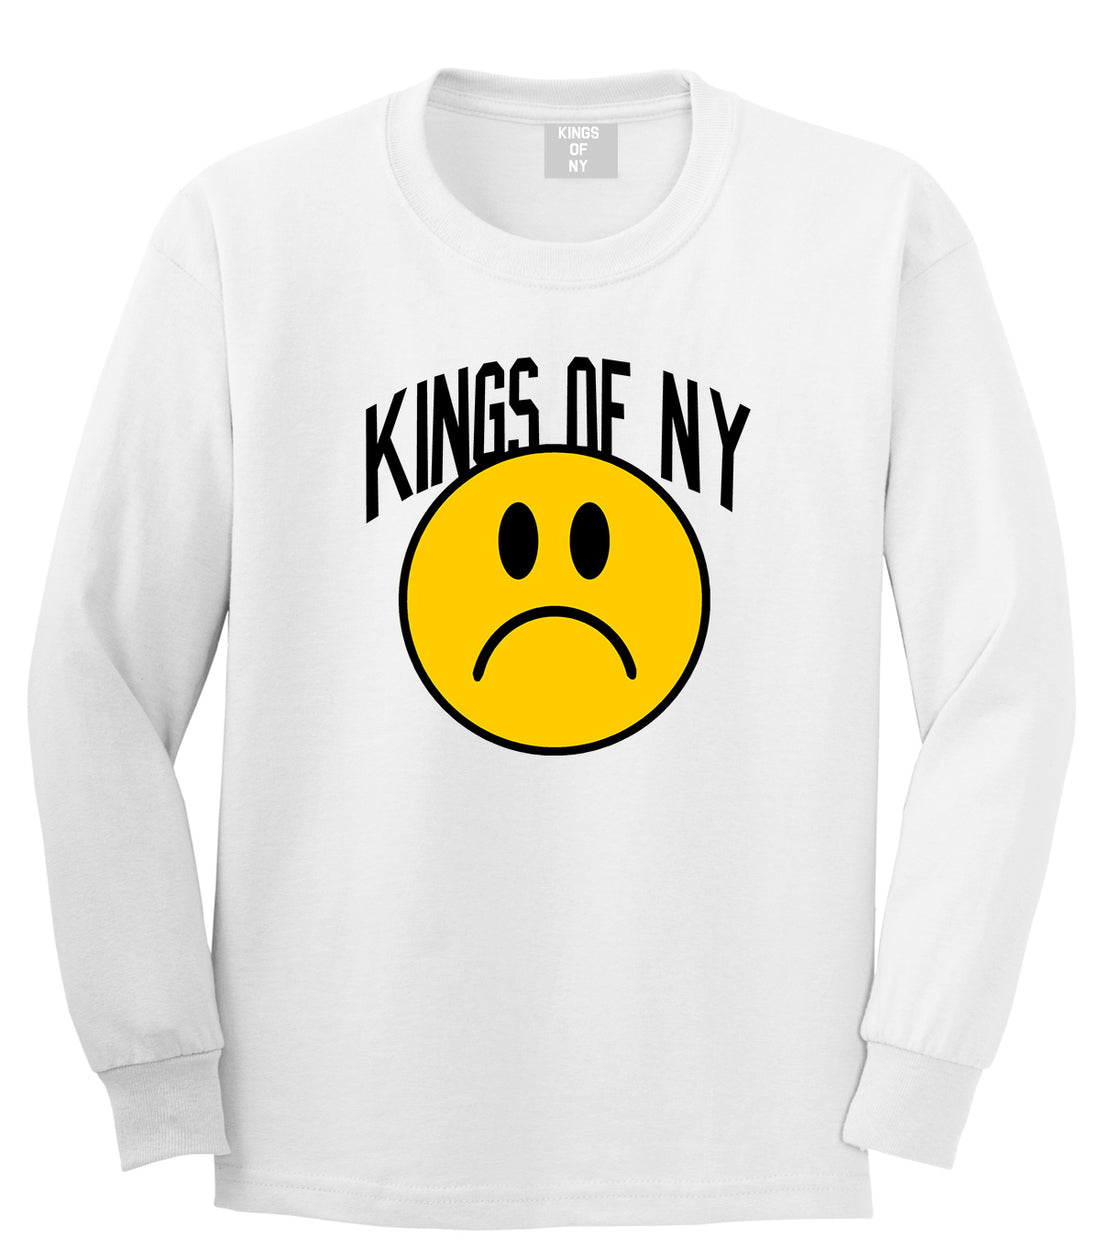 Im Upset Sad Face Mens Long Sleeve T-Shirt White by Kings Of NY